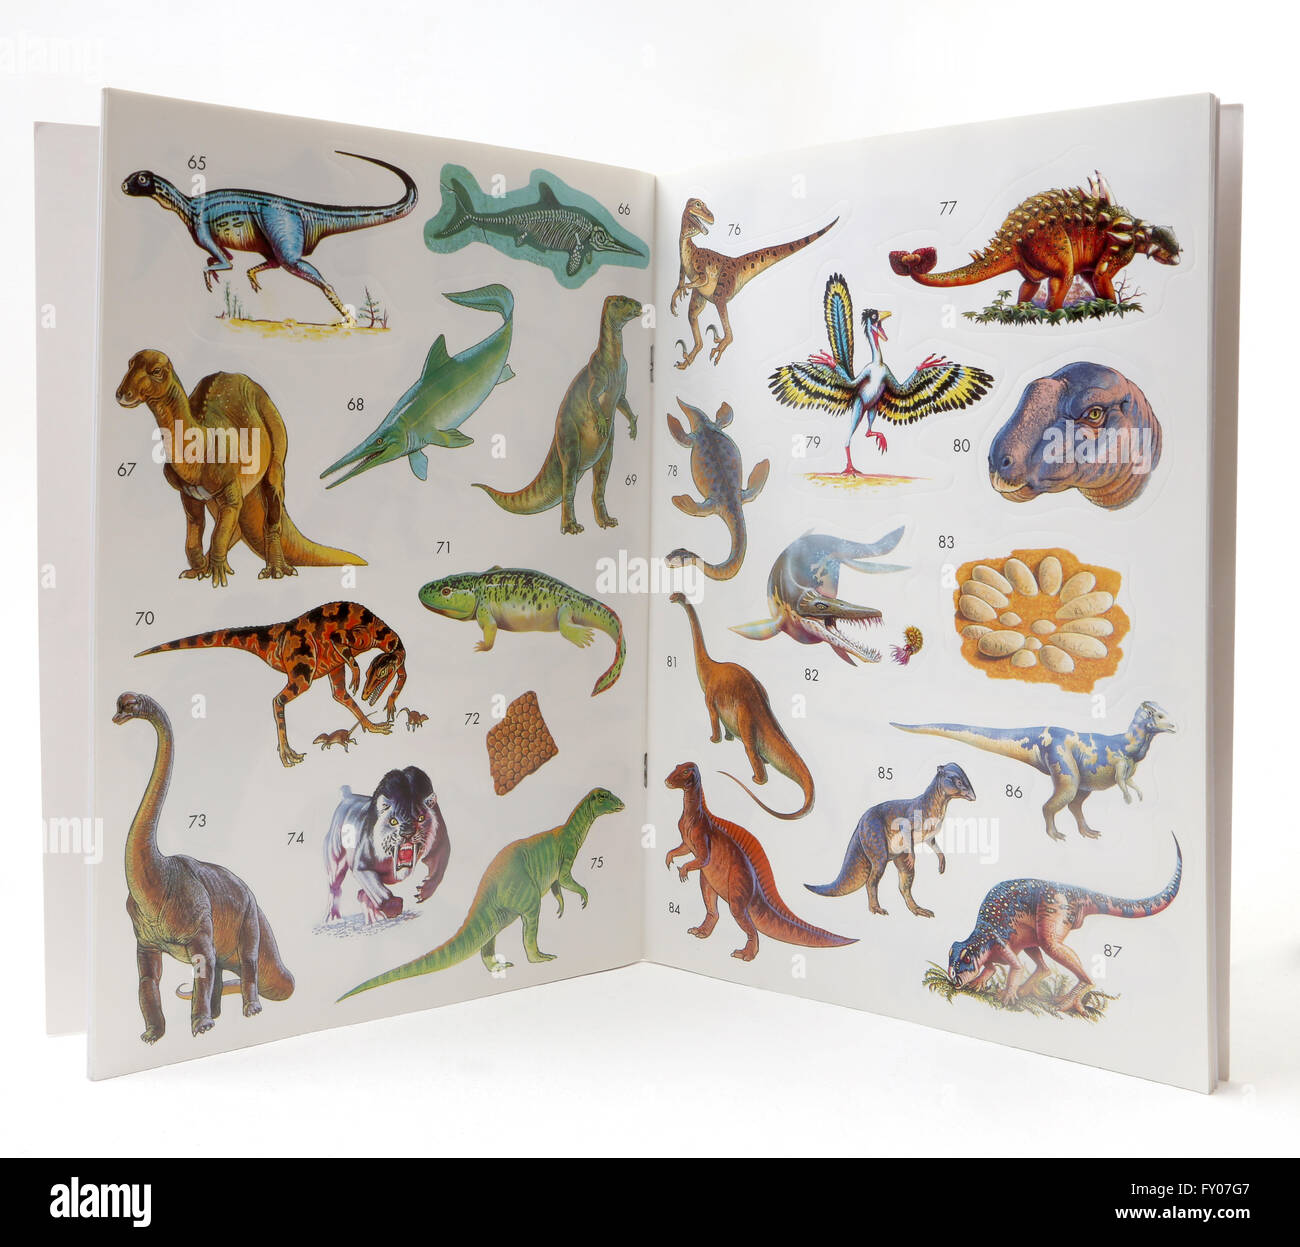 The Usbourne Dinosaur Sticker Book Stock Photo